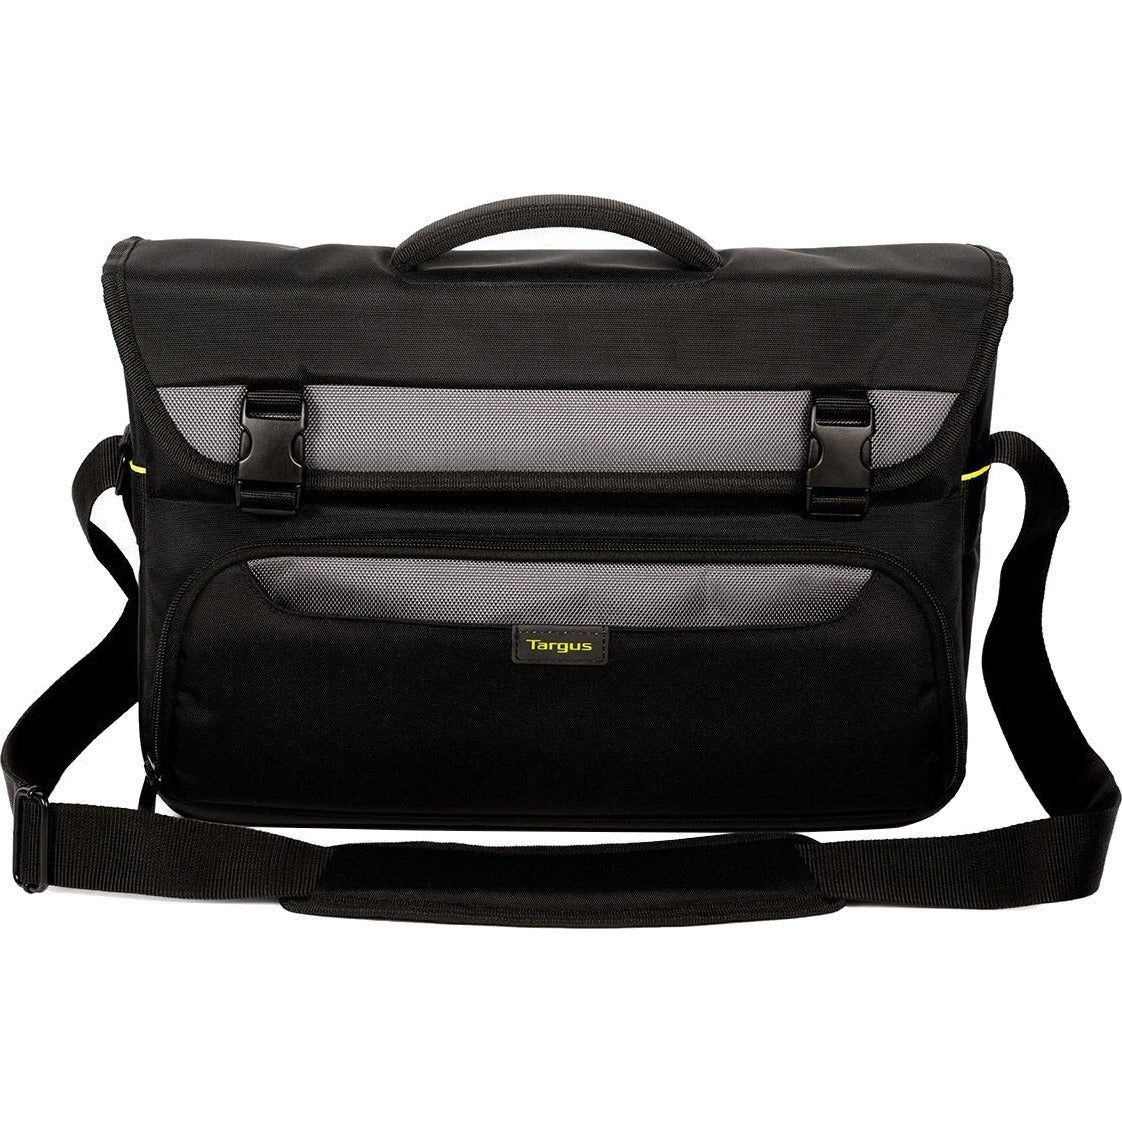 Targus City Gear TCG270 Carrying Case (Messenger) for 17.3" Notebook - Black, Gray